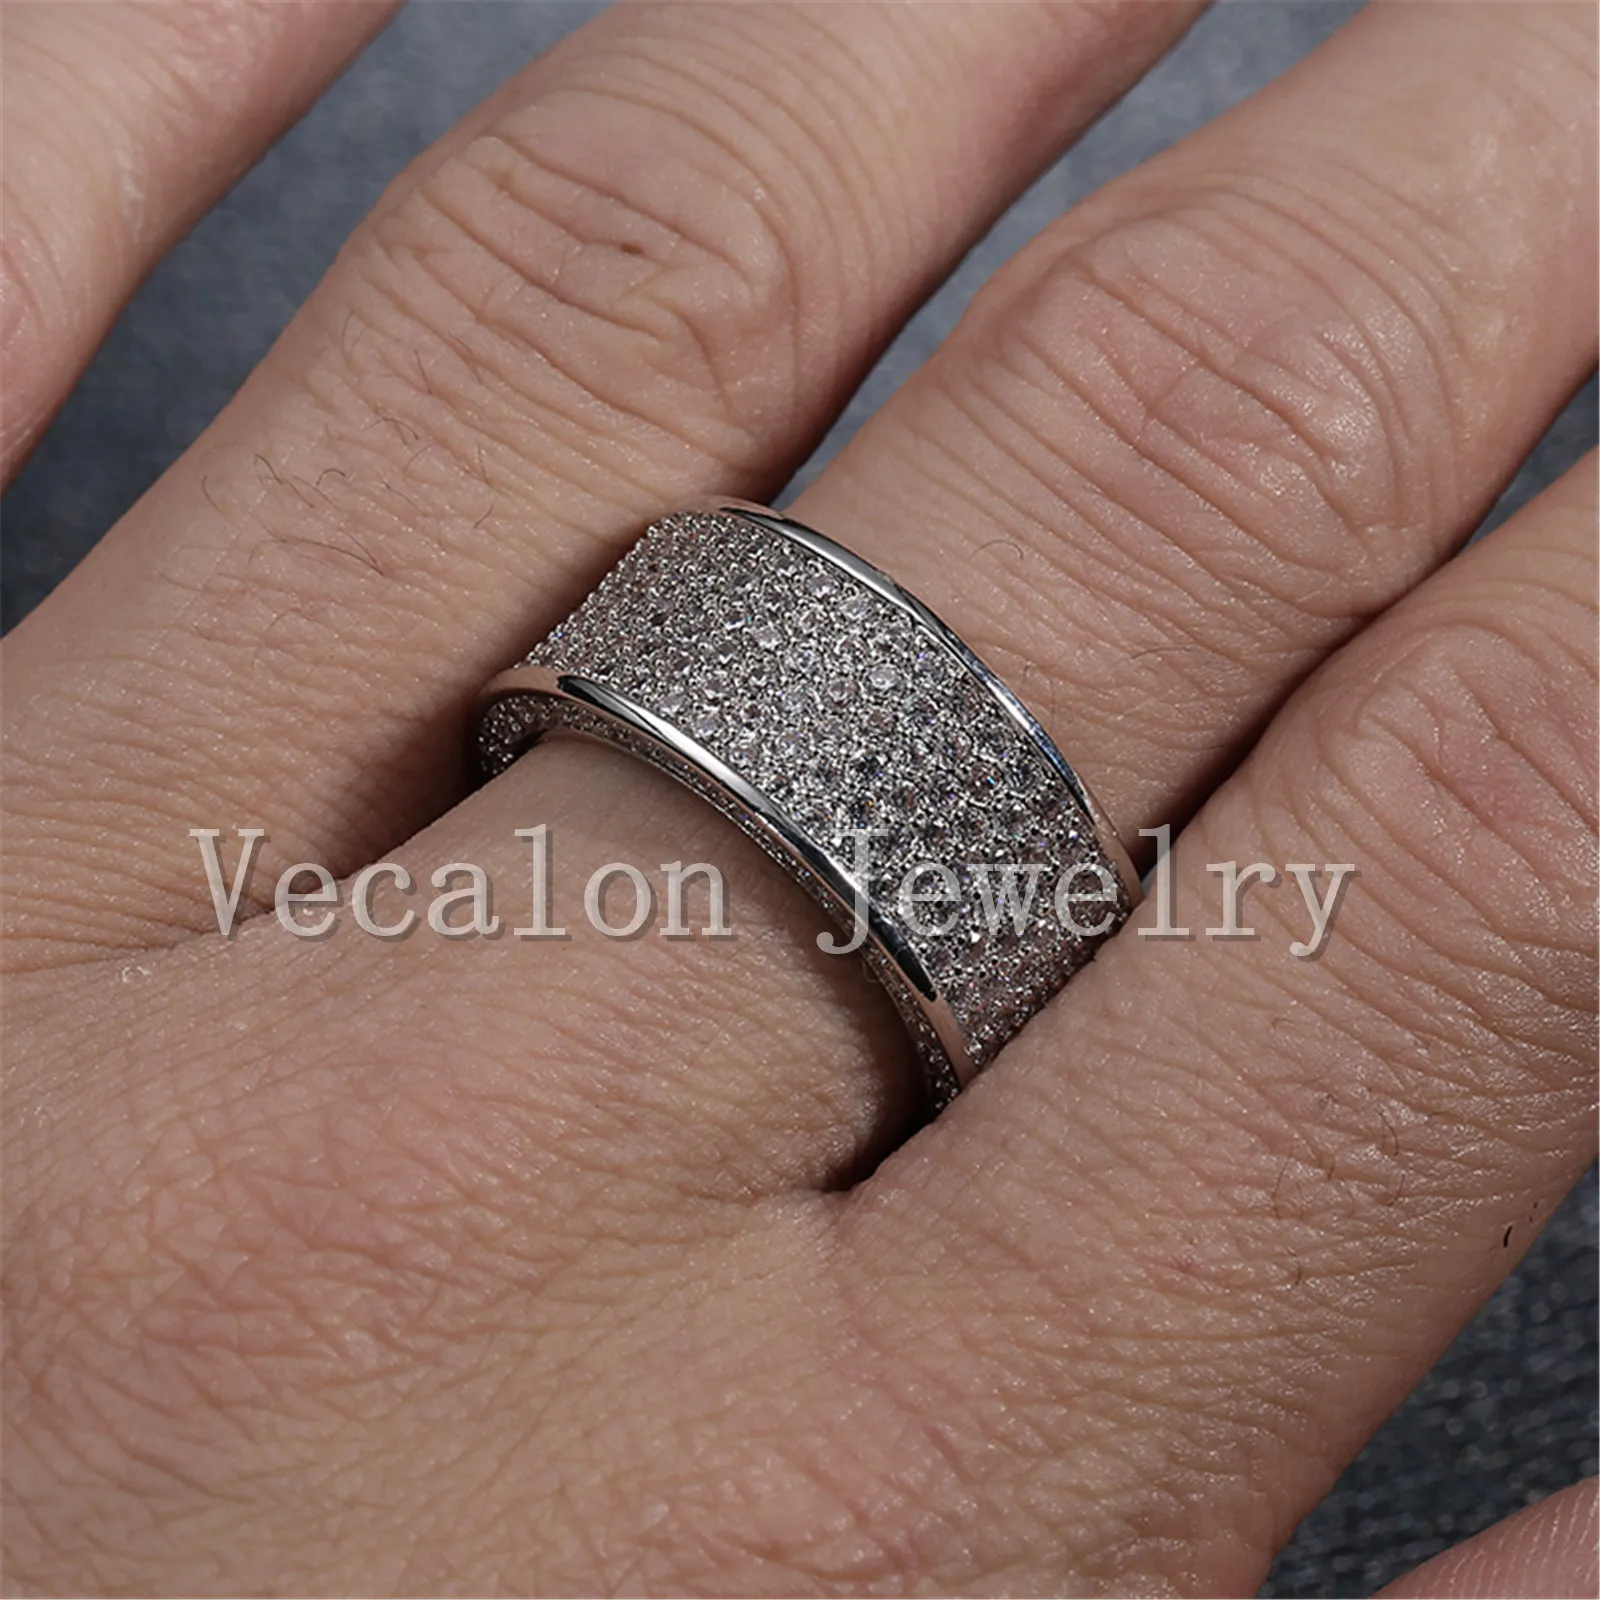 Vecalon Full Simulated diamond Cz Wedding Band Ring for Women 10KT White Gold Filled Female Engagement Band Sz 5-11